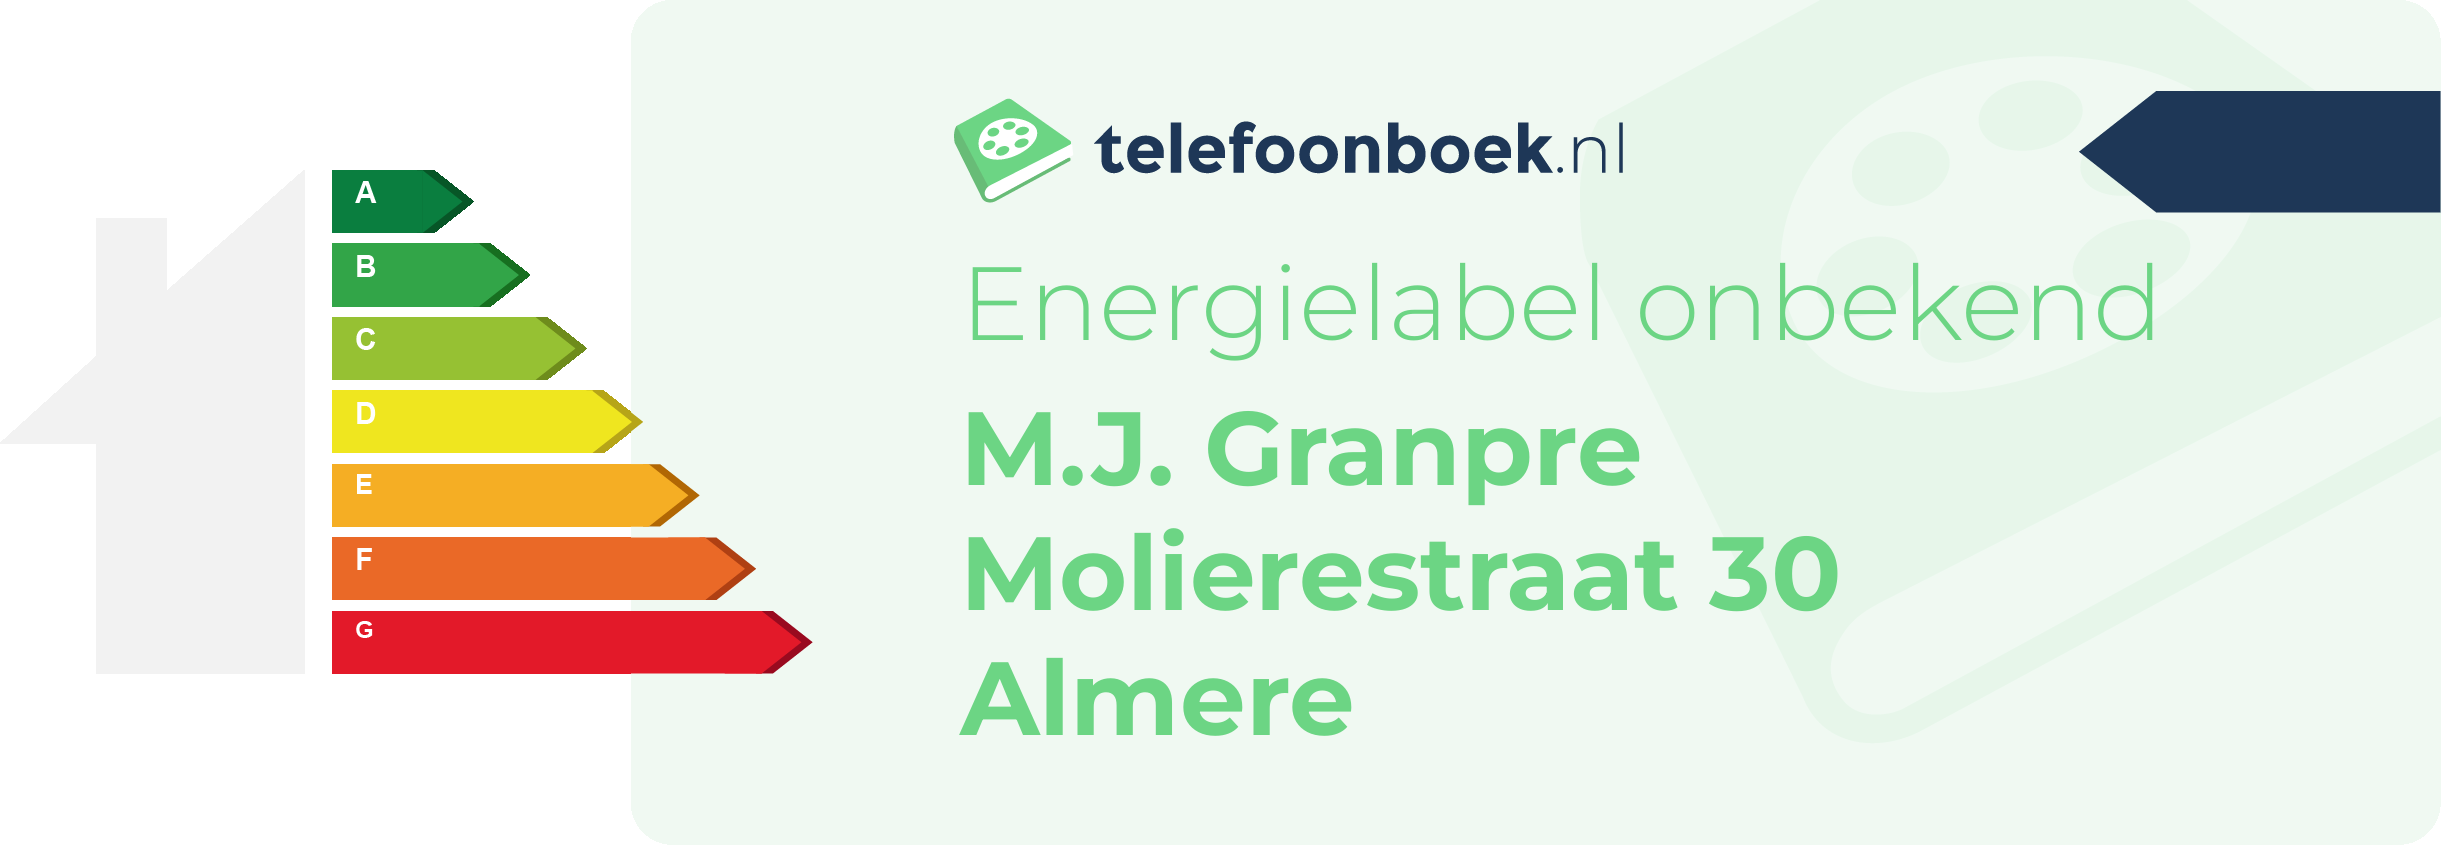 Energielabel M.J. Granpre Molierestraat 30 Almere